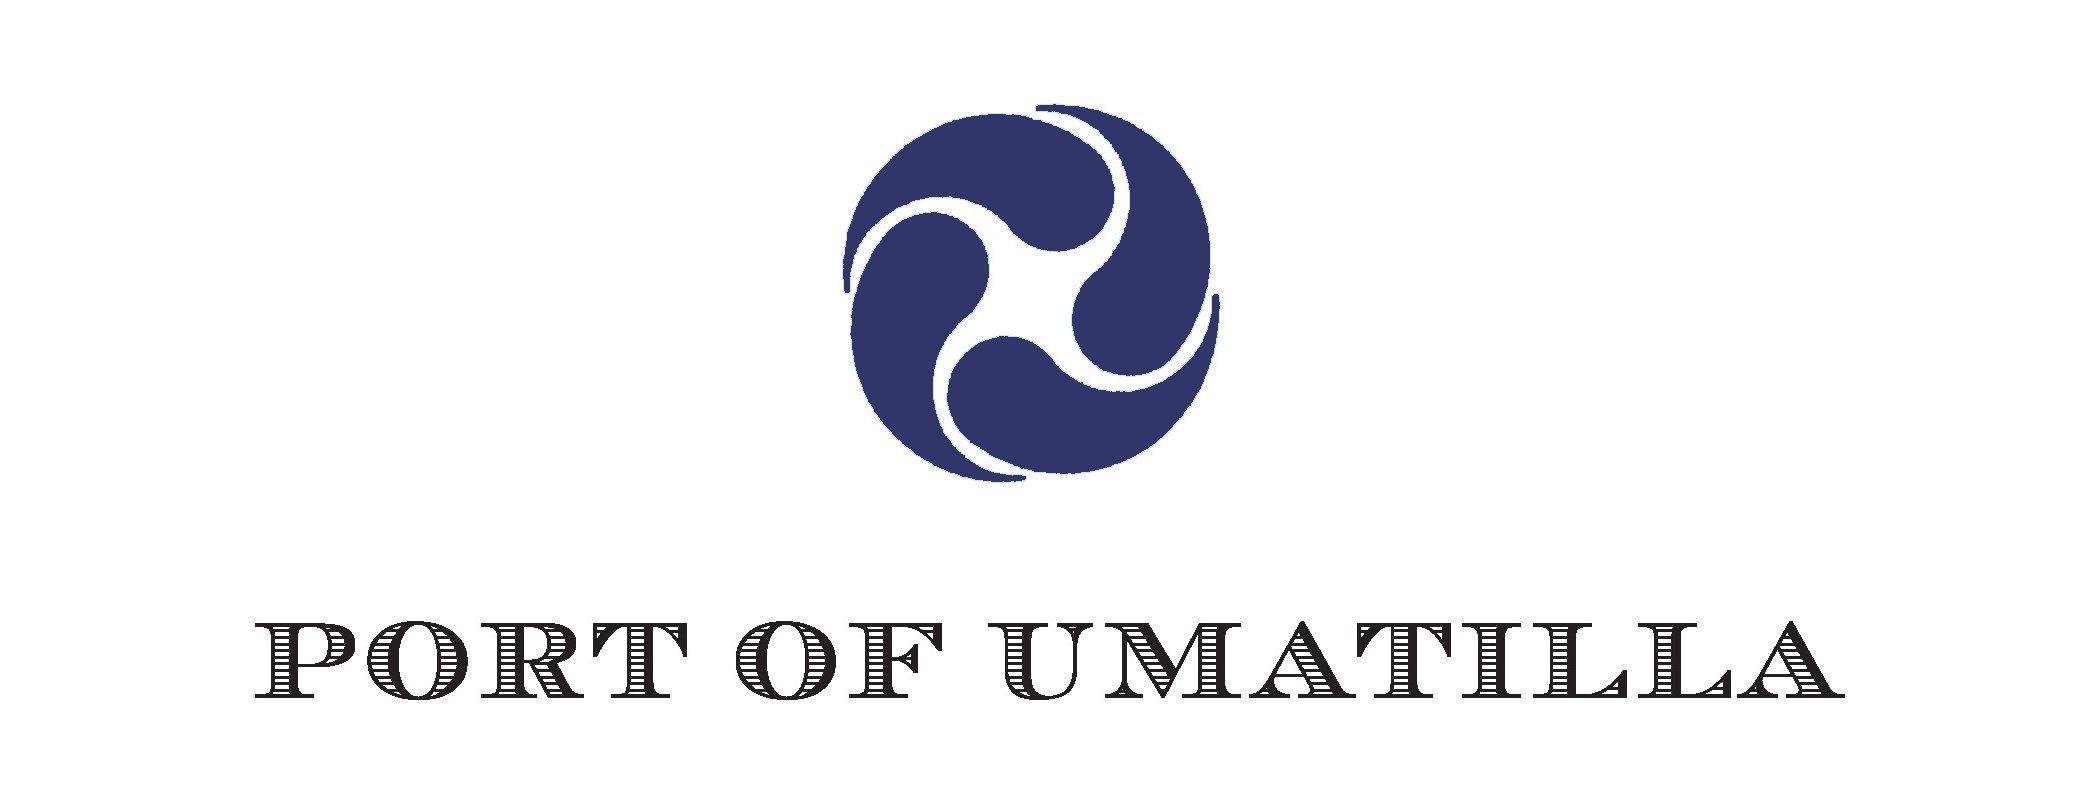 Umatilla Logo - Industrial Properties, Economic Development - Port of Umatilla